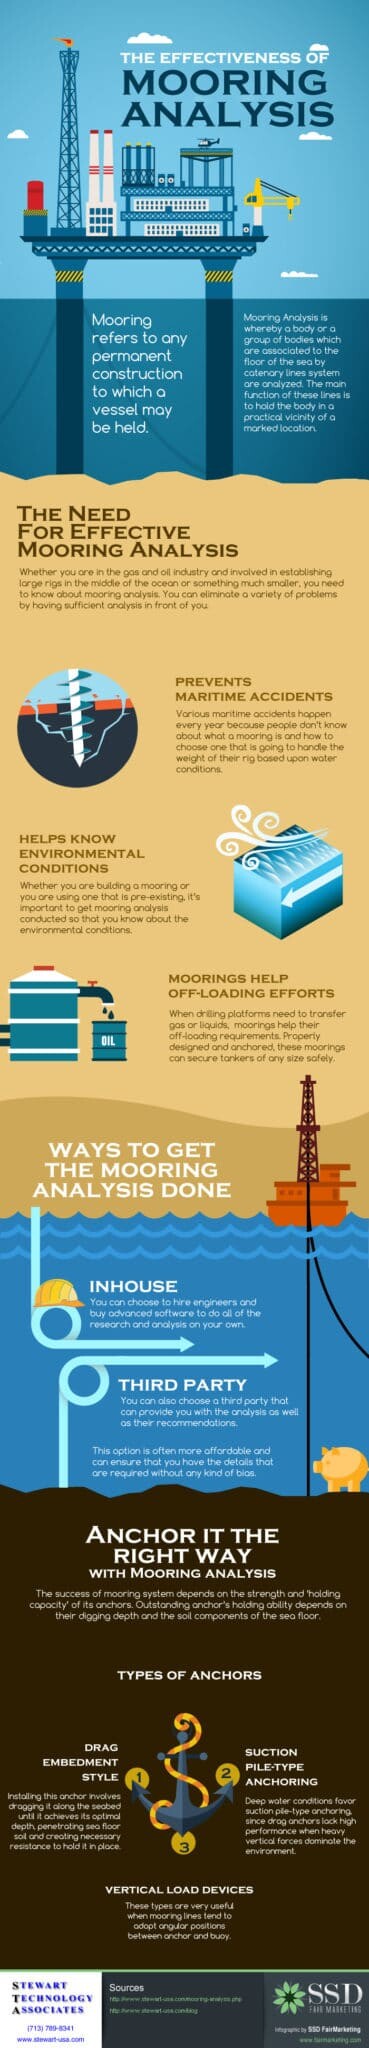 mooring-analysis-infographic-september-2014